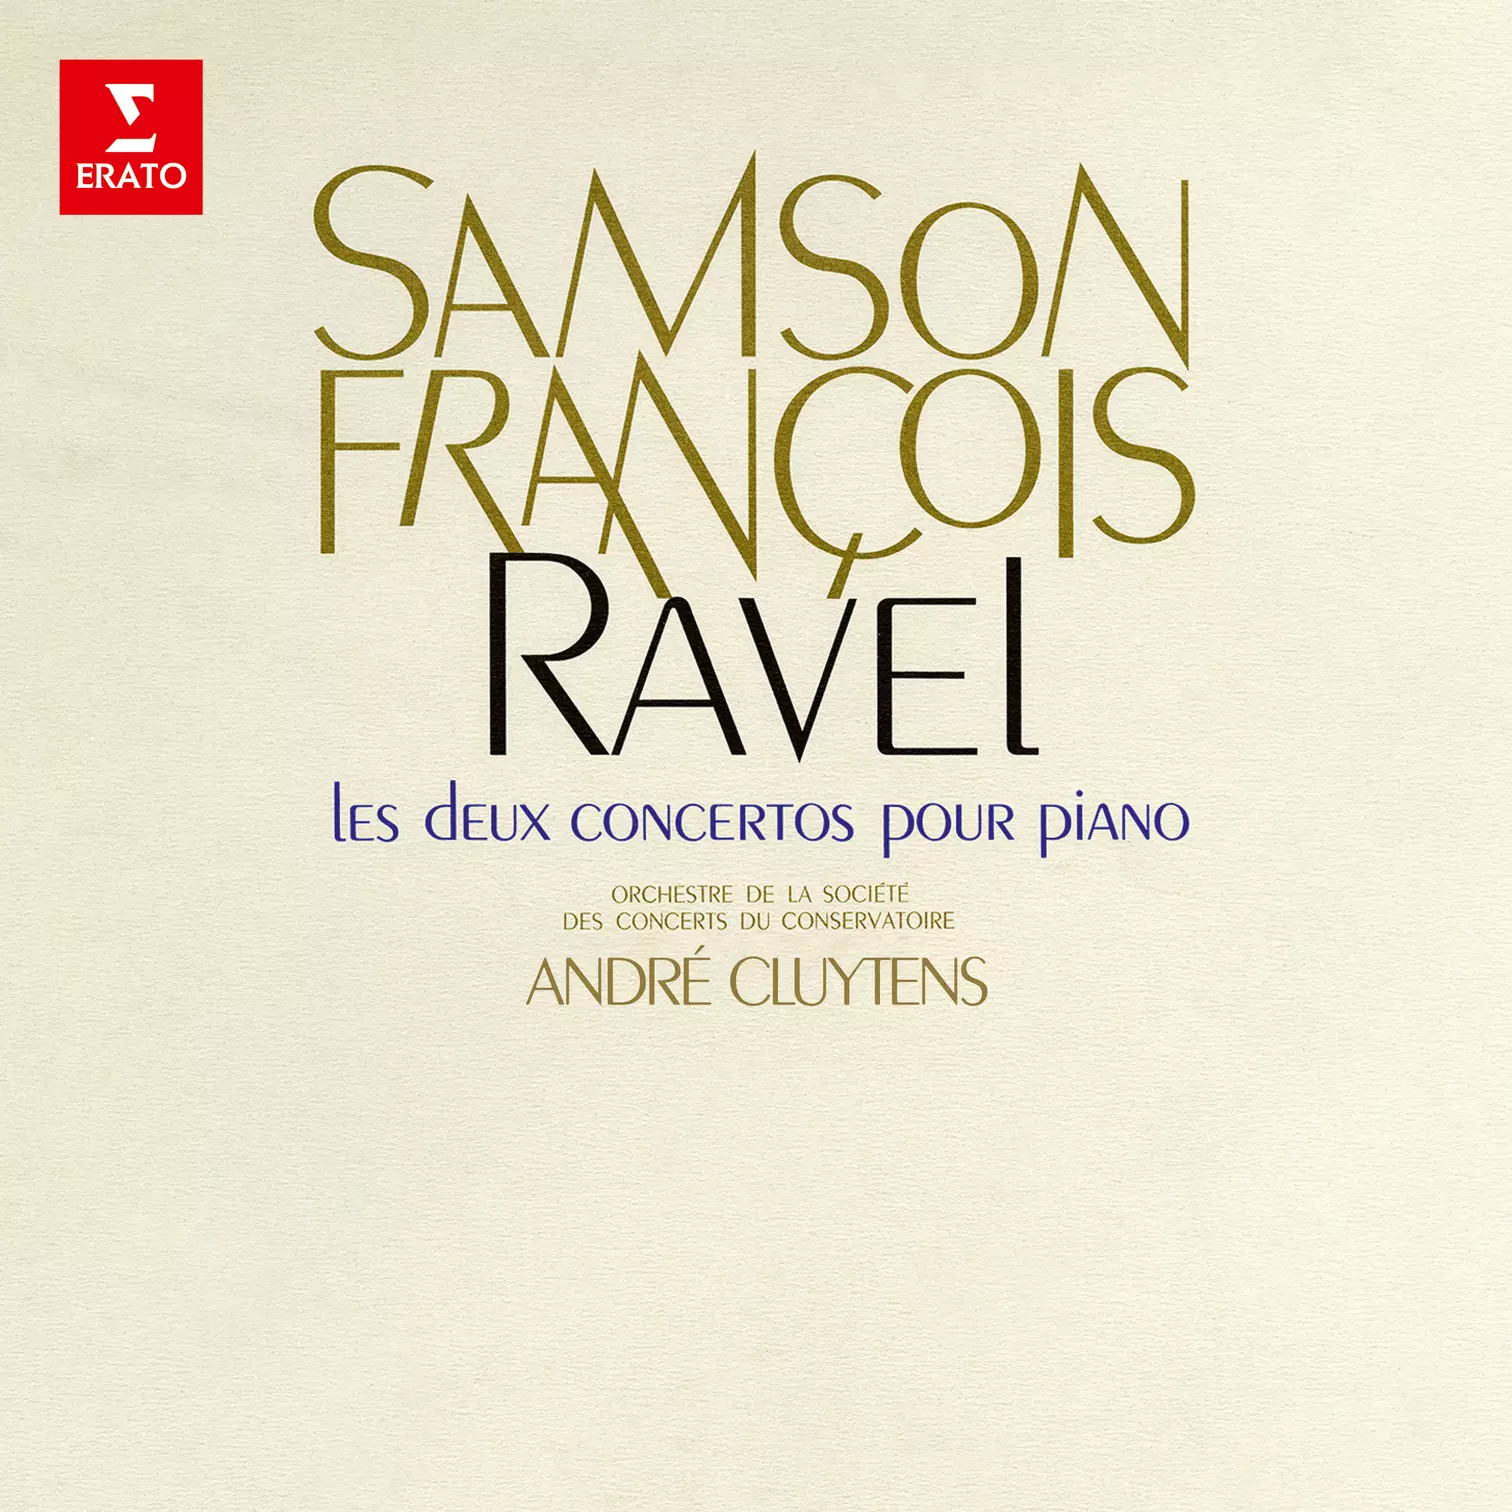 Ravel: Concertos pour piano